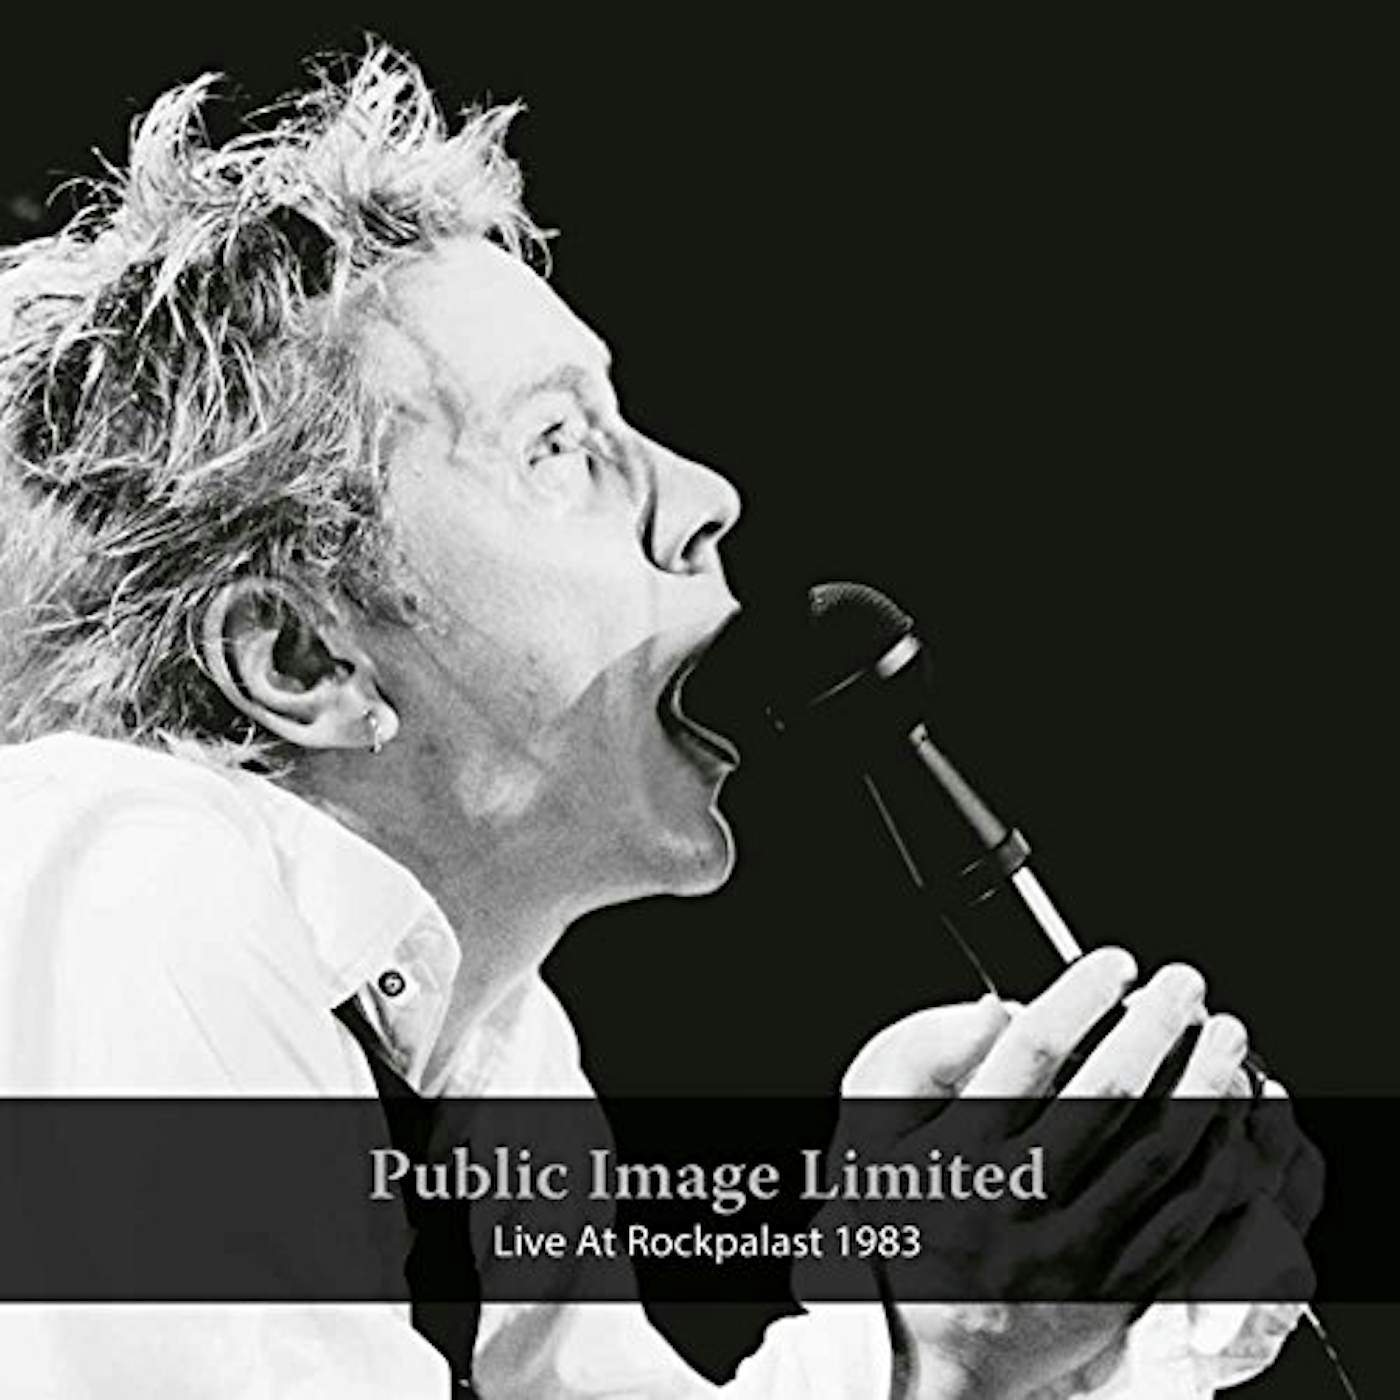 Public Image Ltd. Live At Rockpalast 1983 Vinyl Record